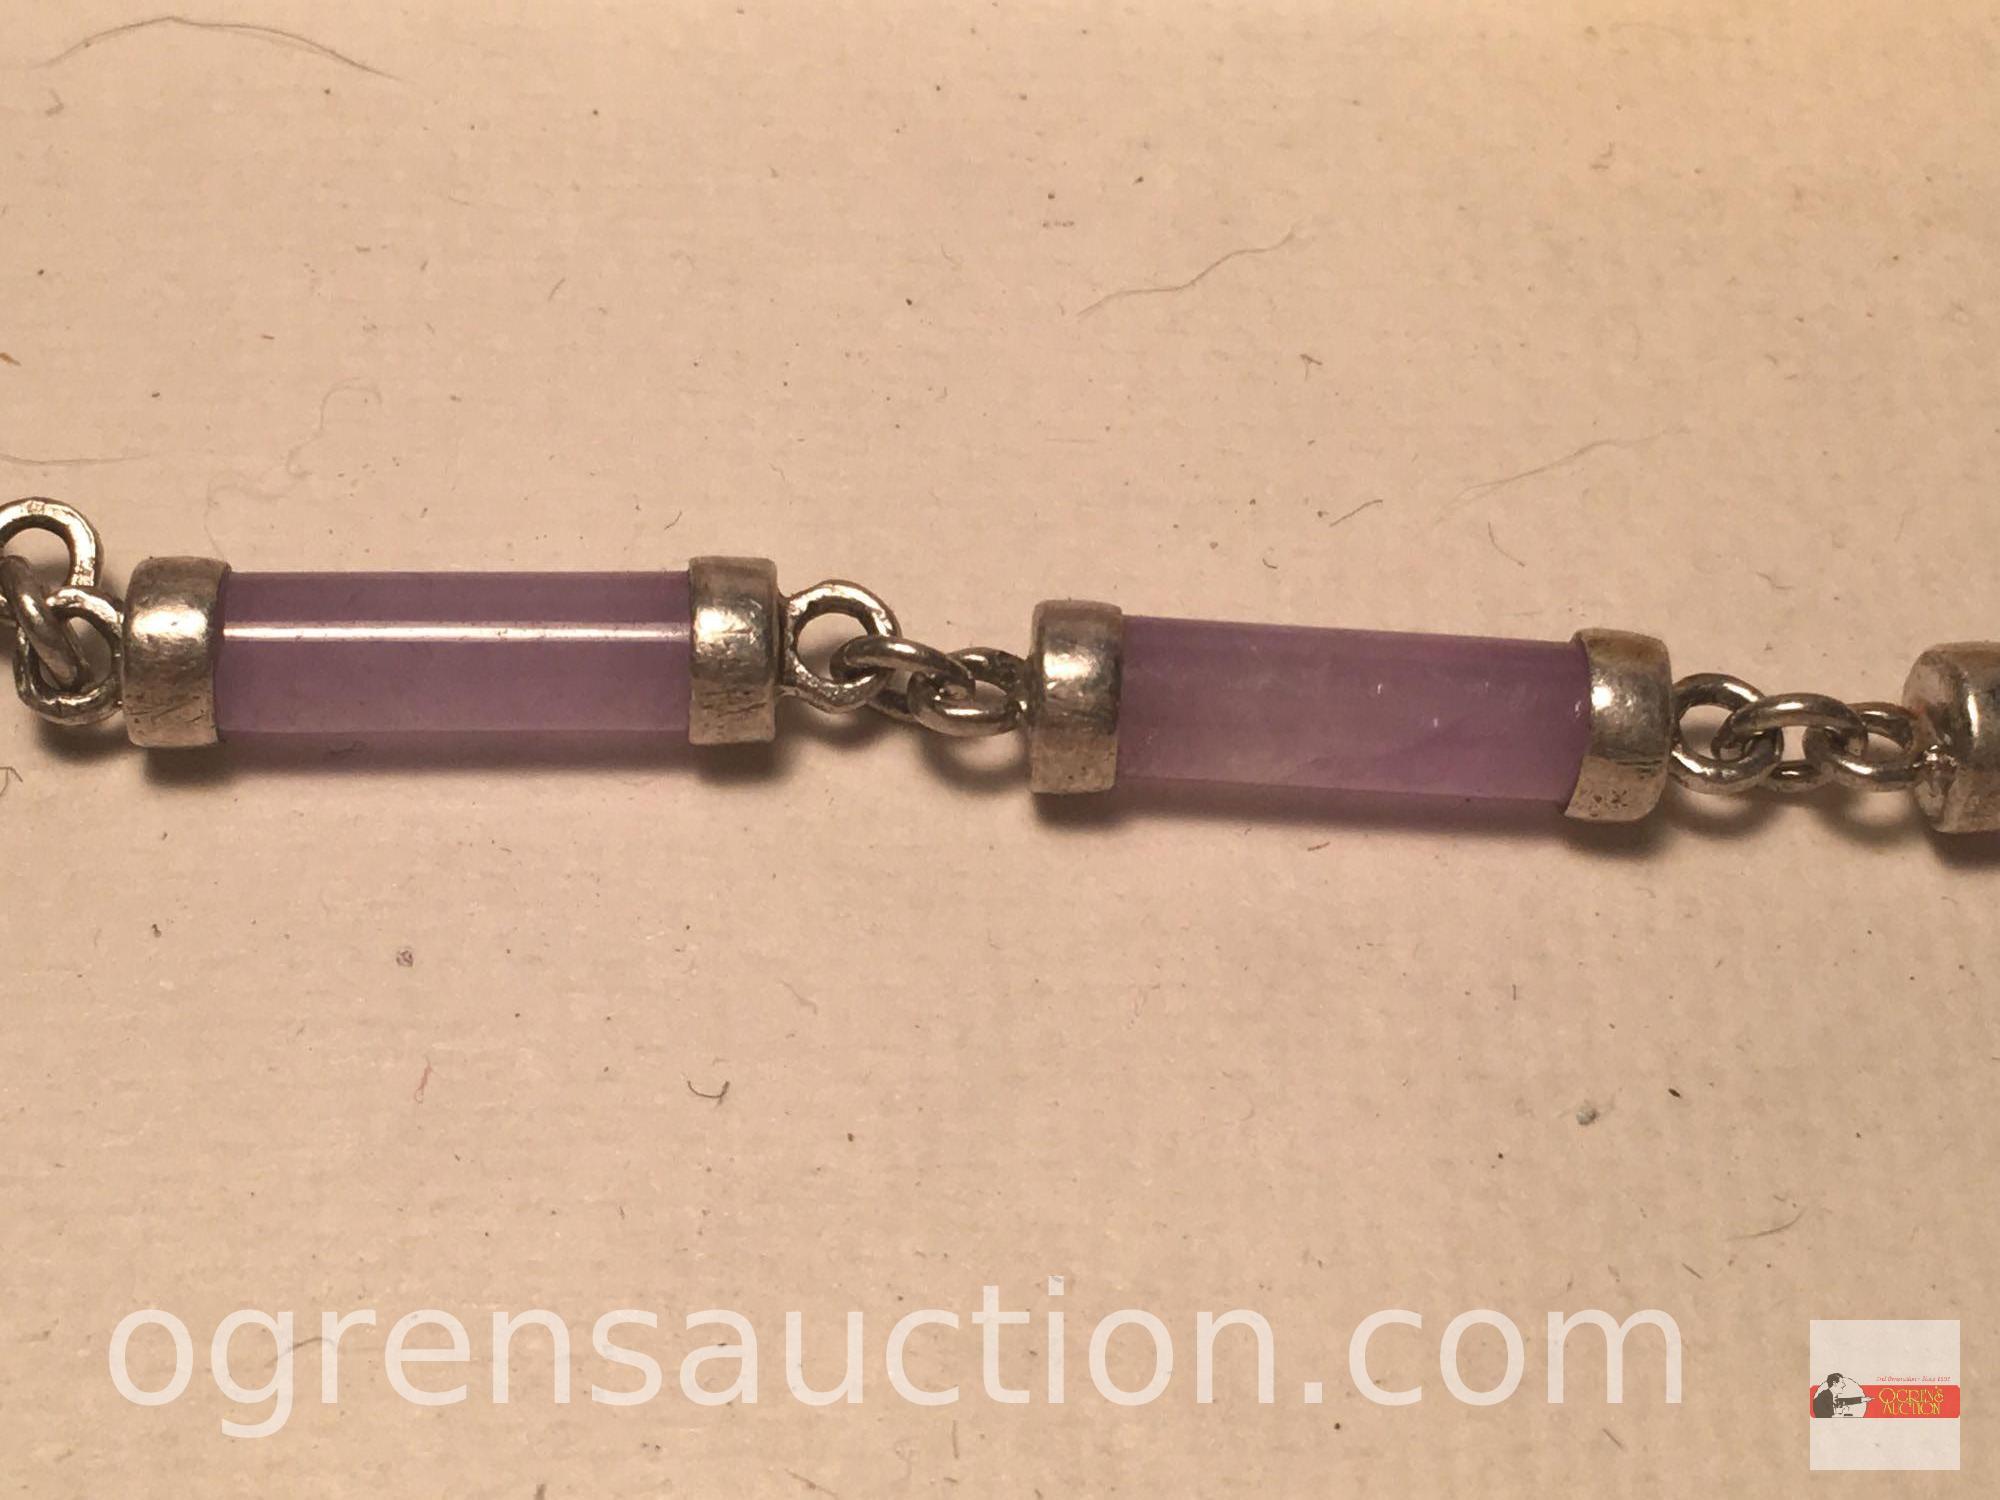 Jewelry - Bracelet, sterling with rose quartz stones